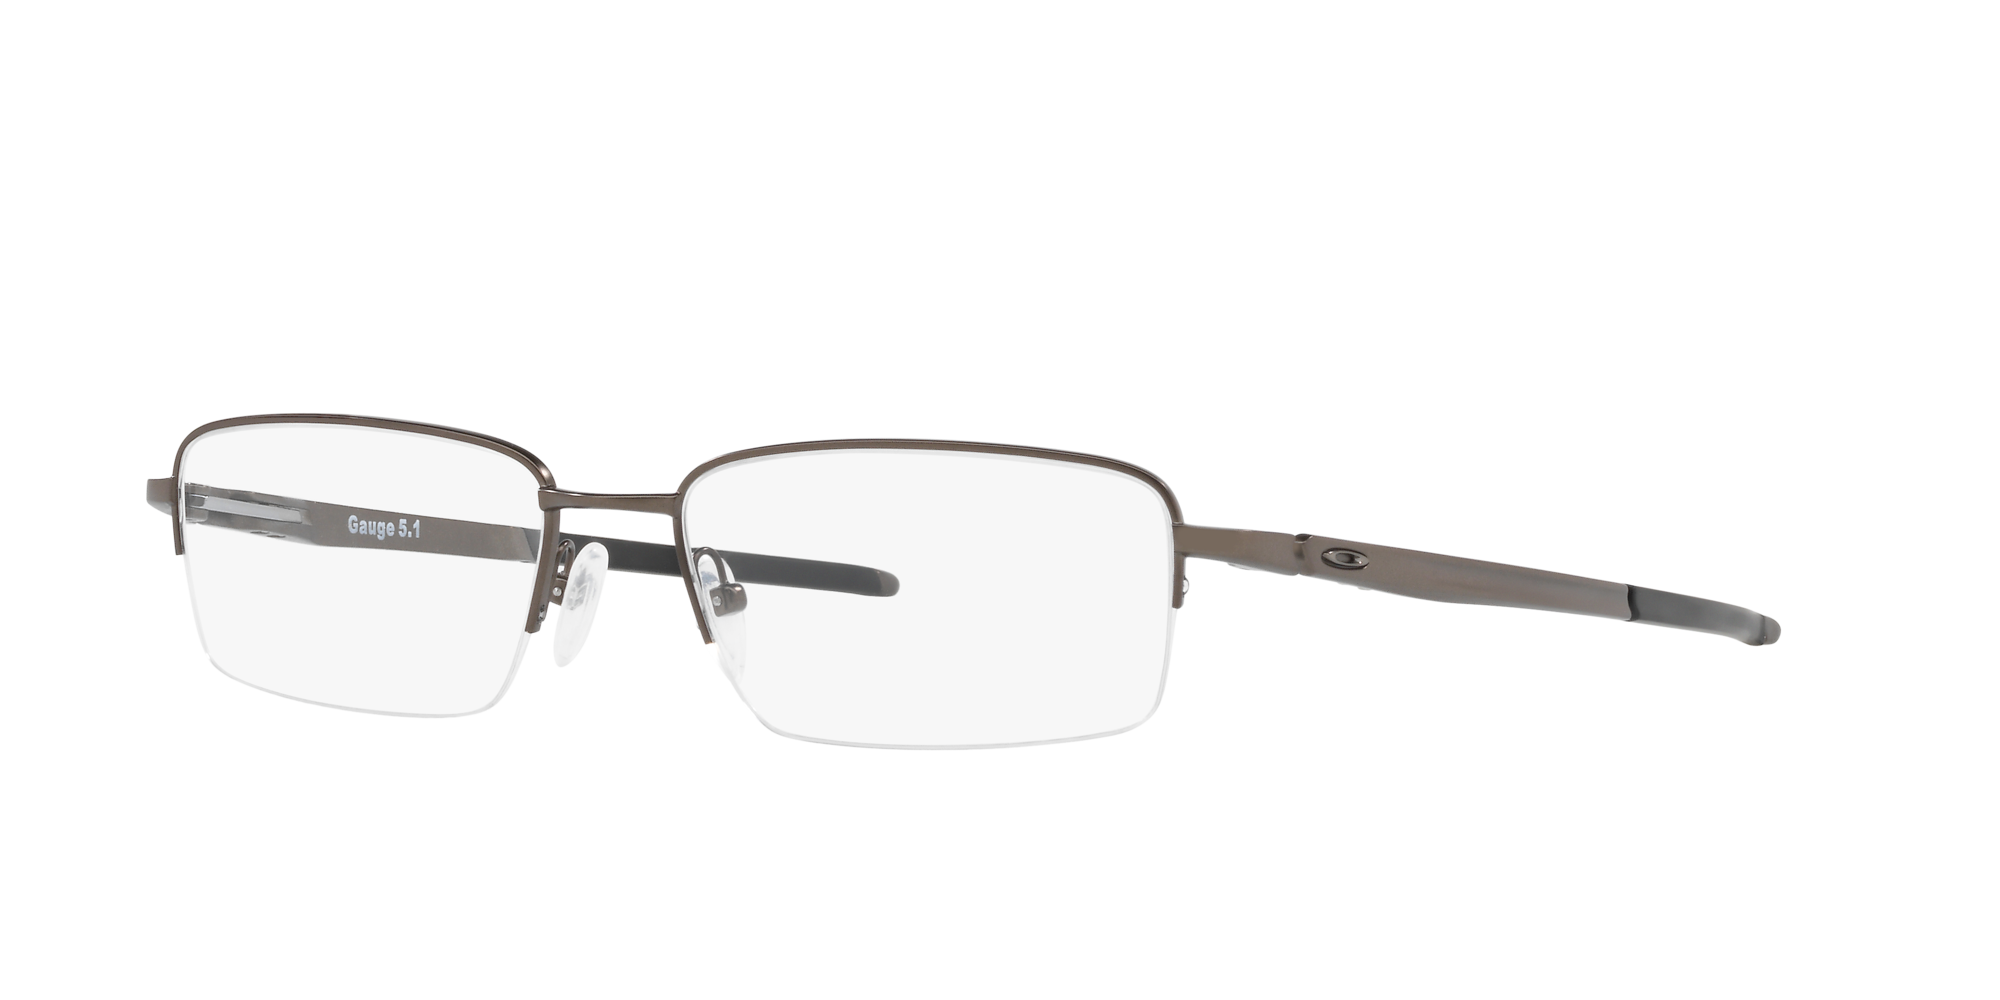 Mens Accessories Sunglasses Oakley Gauge 5.1 in Black for Men 